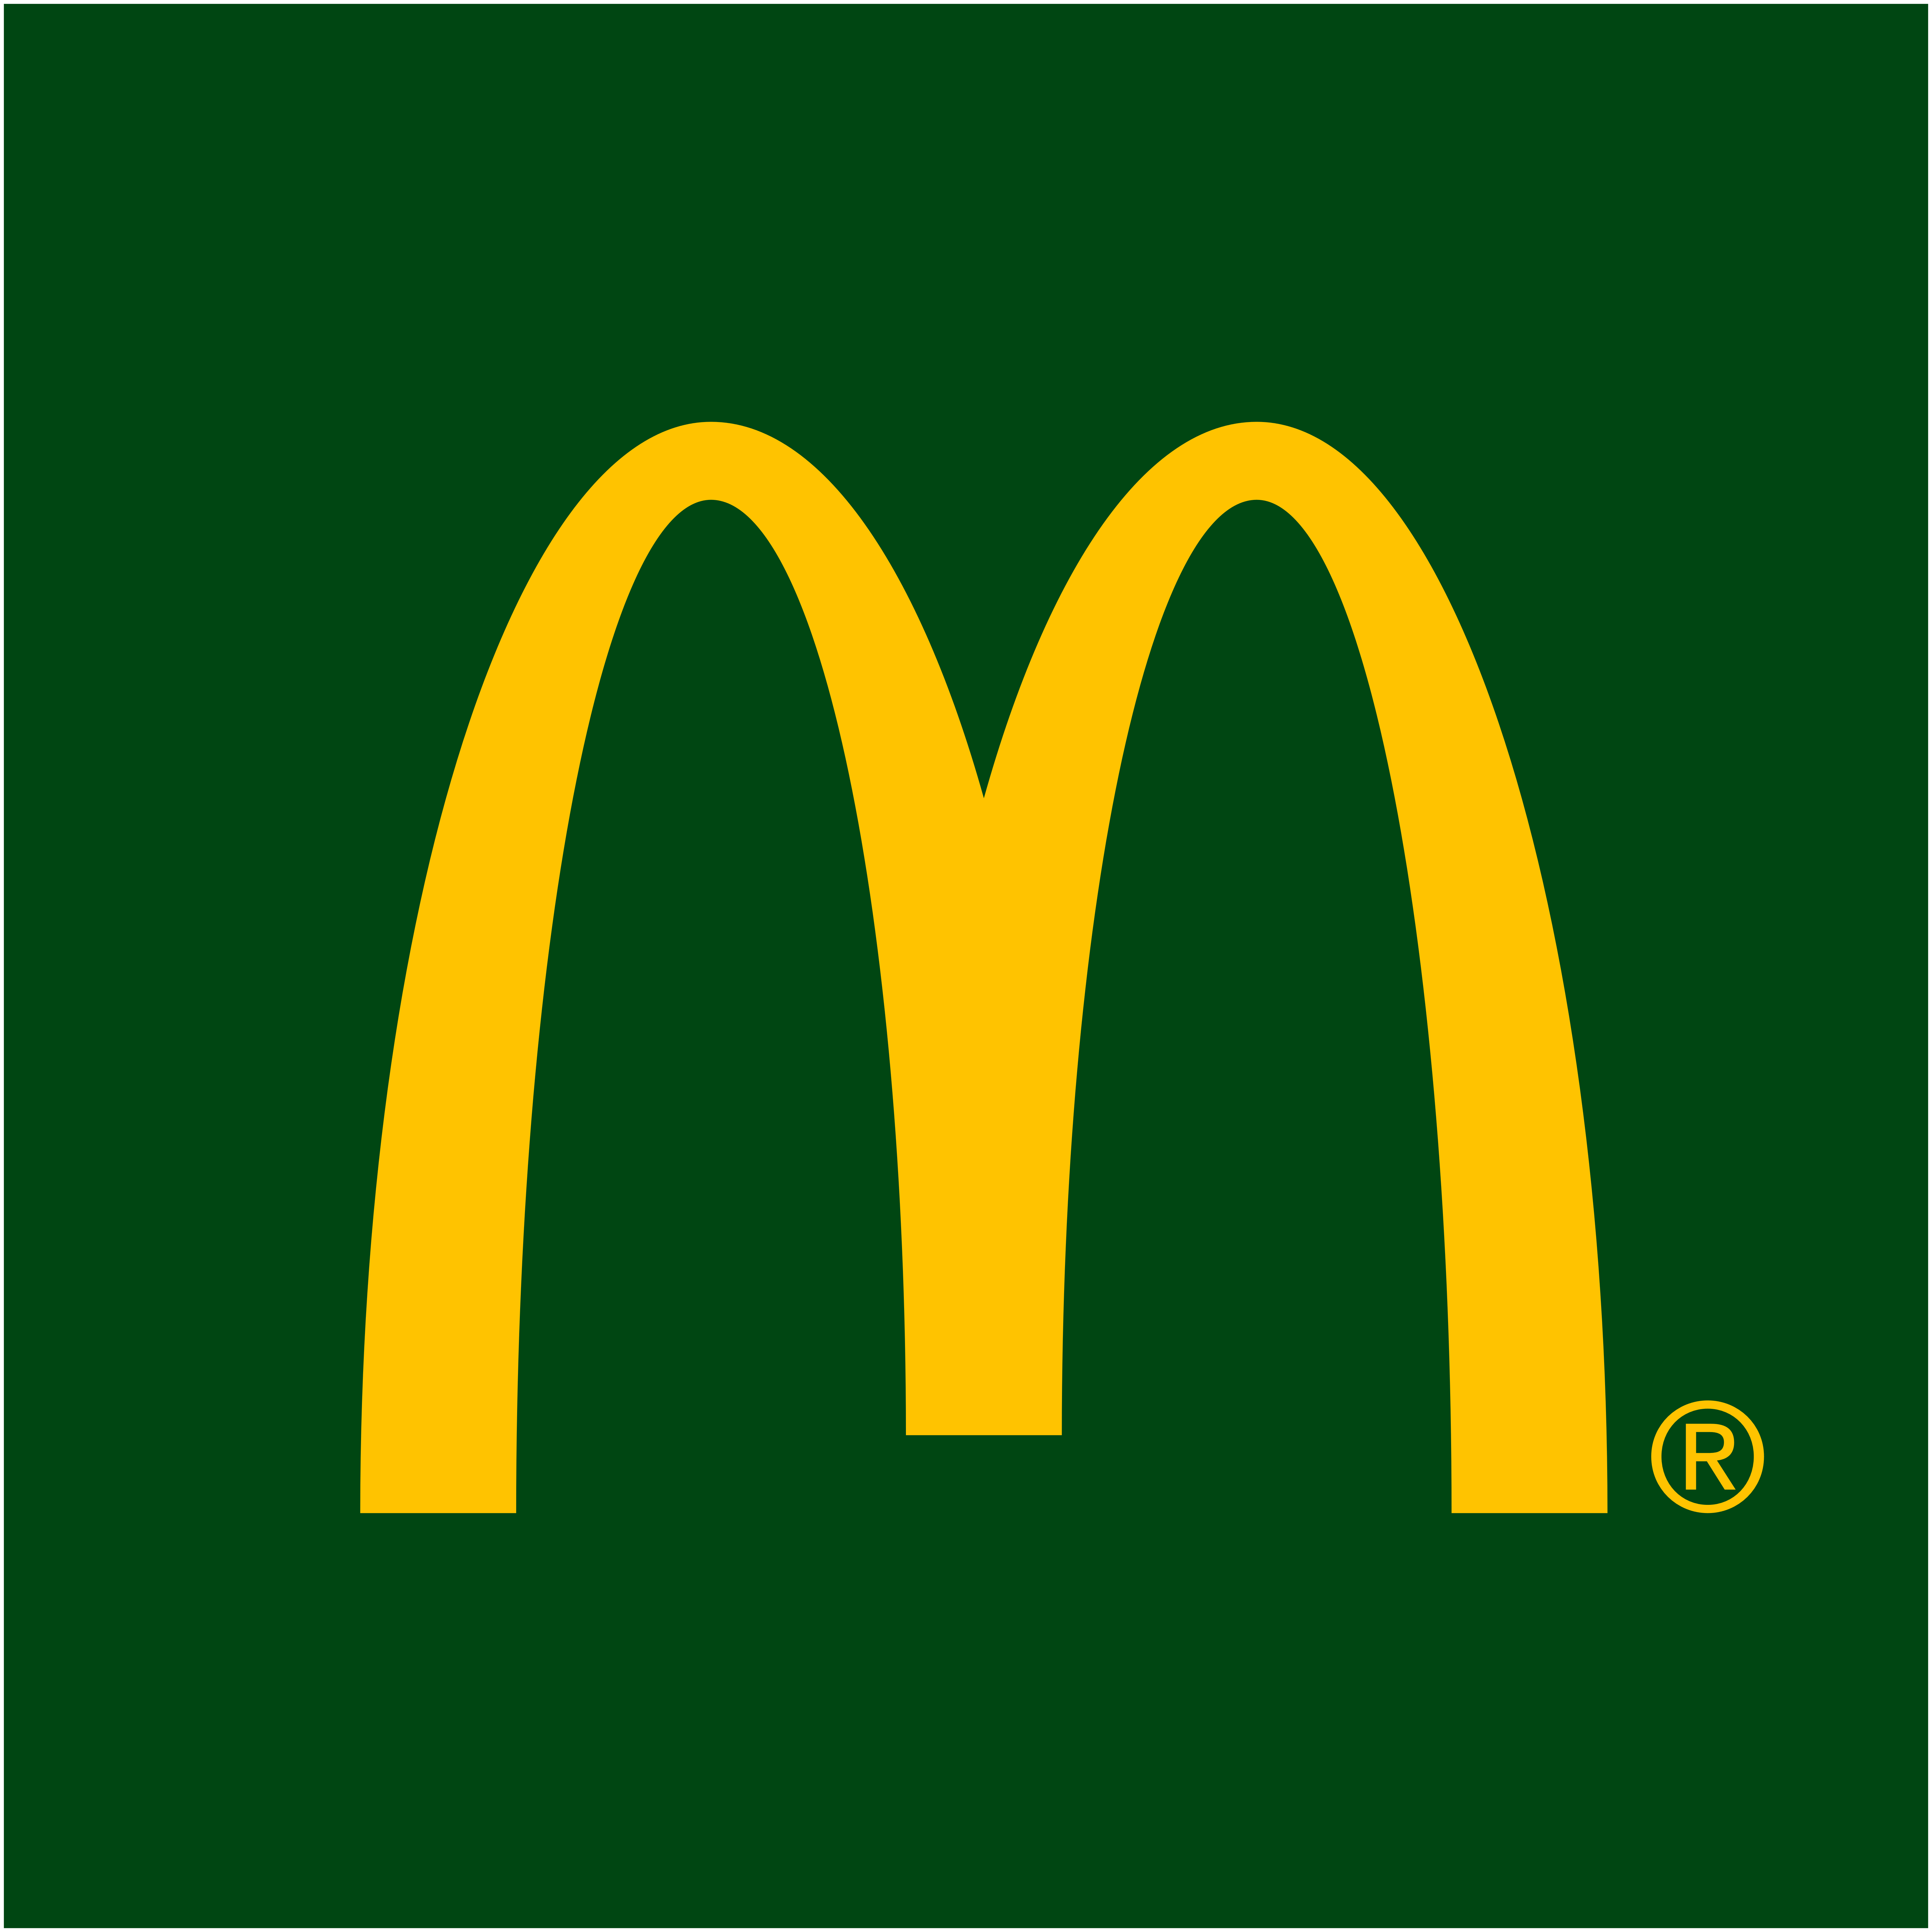 New McDonald's Logo - Mcdonald's new Logos